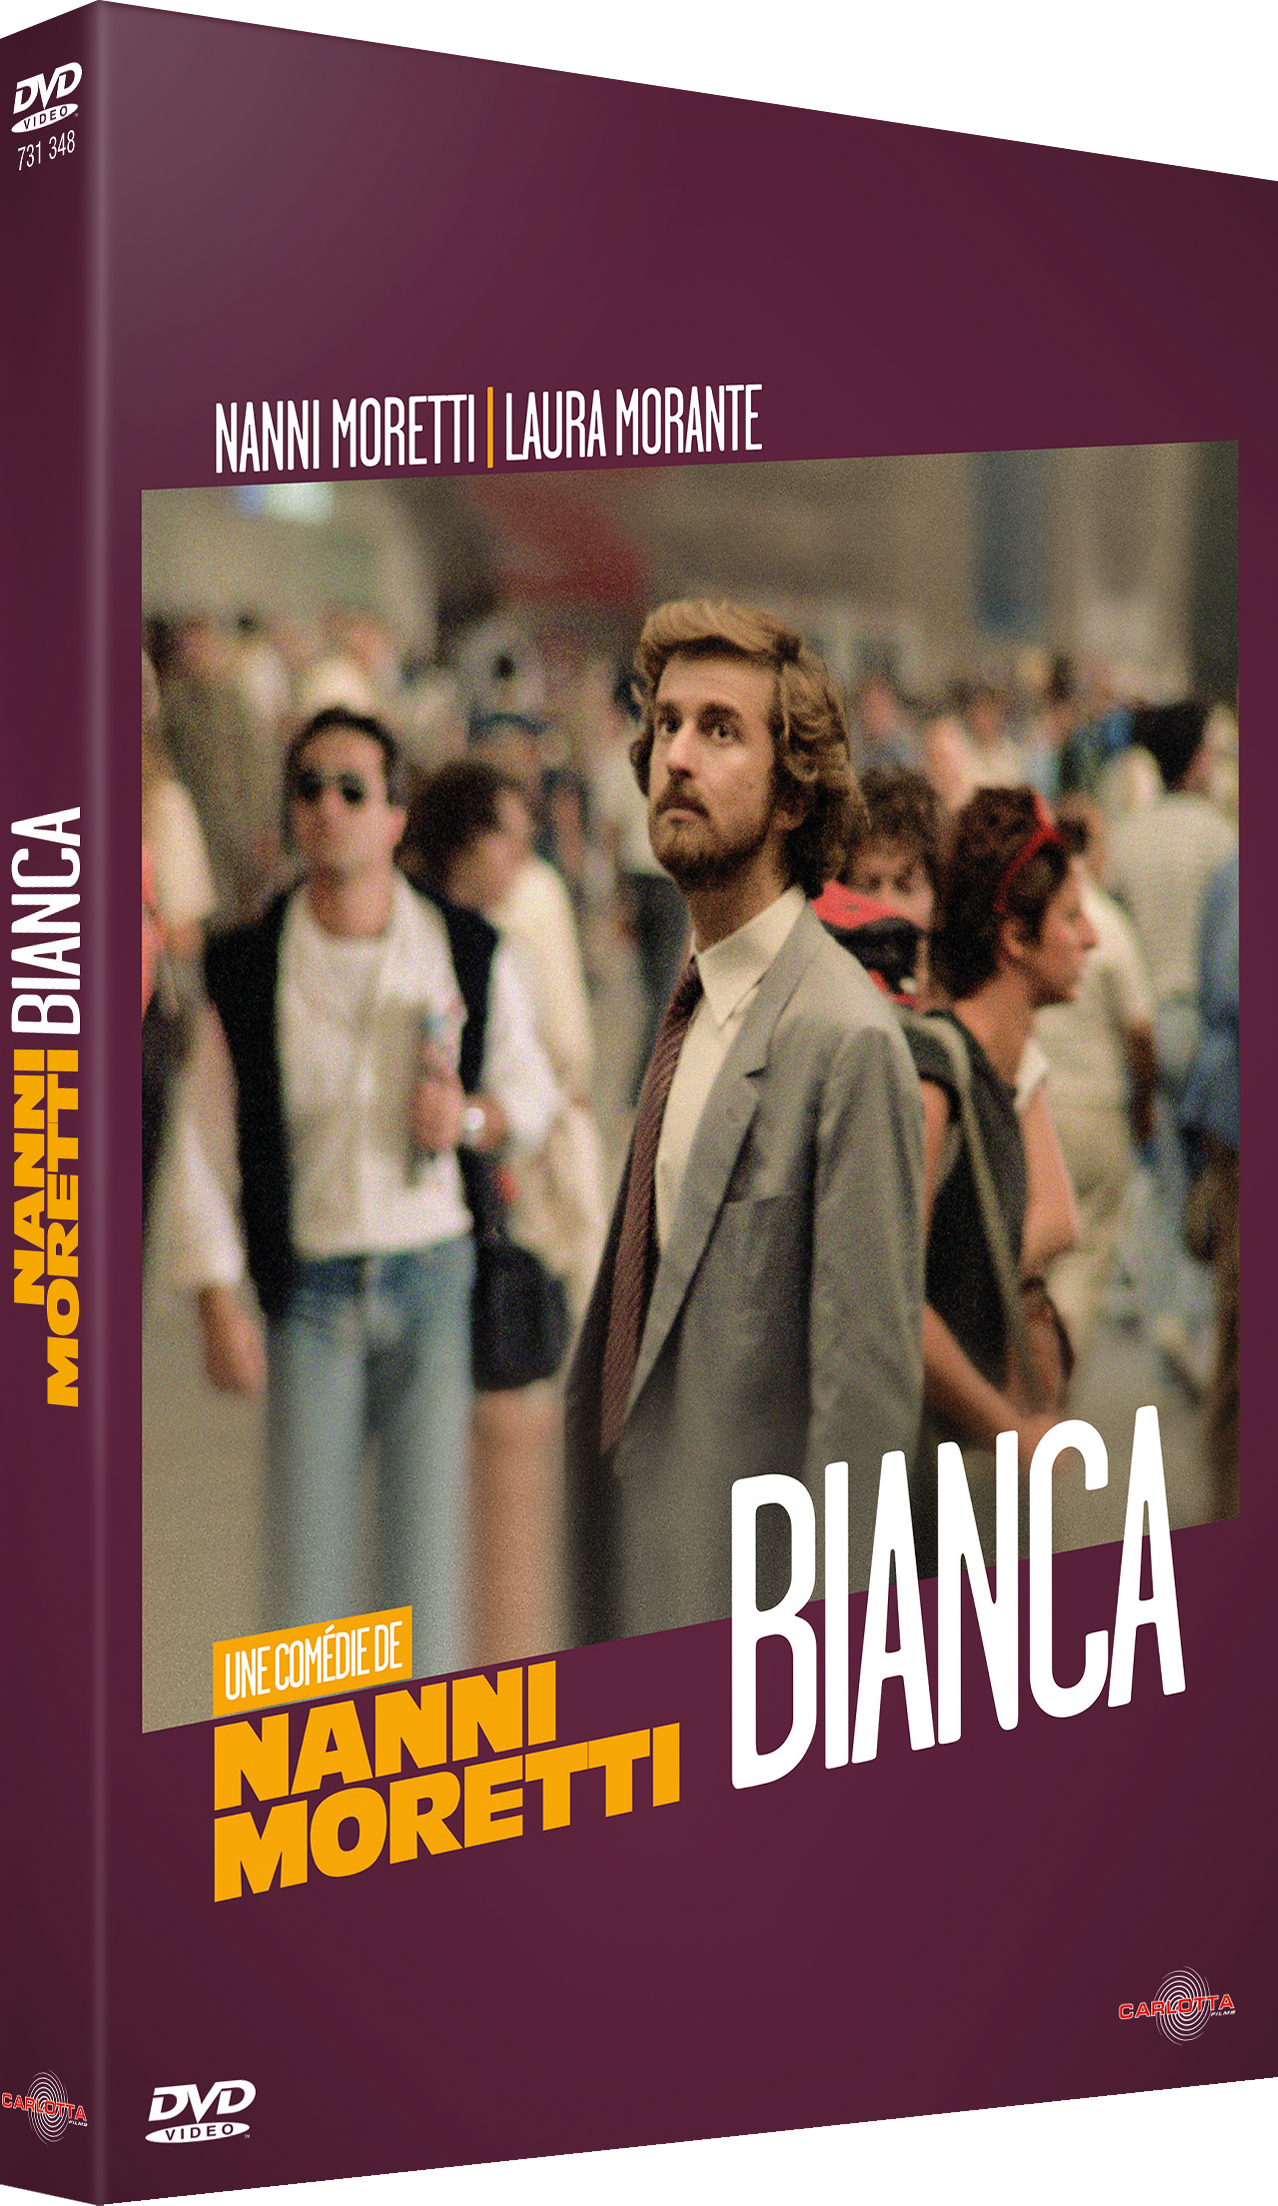 Bianca by Nanni Moretti